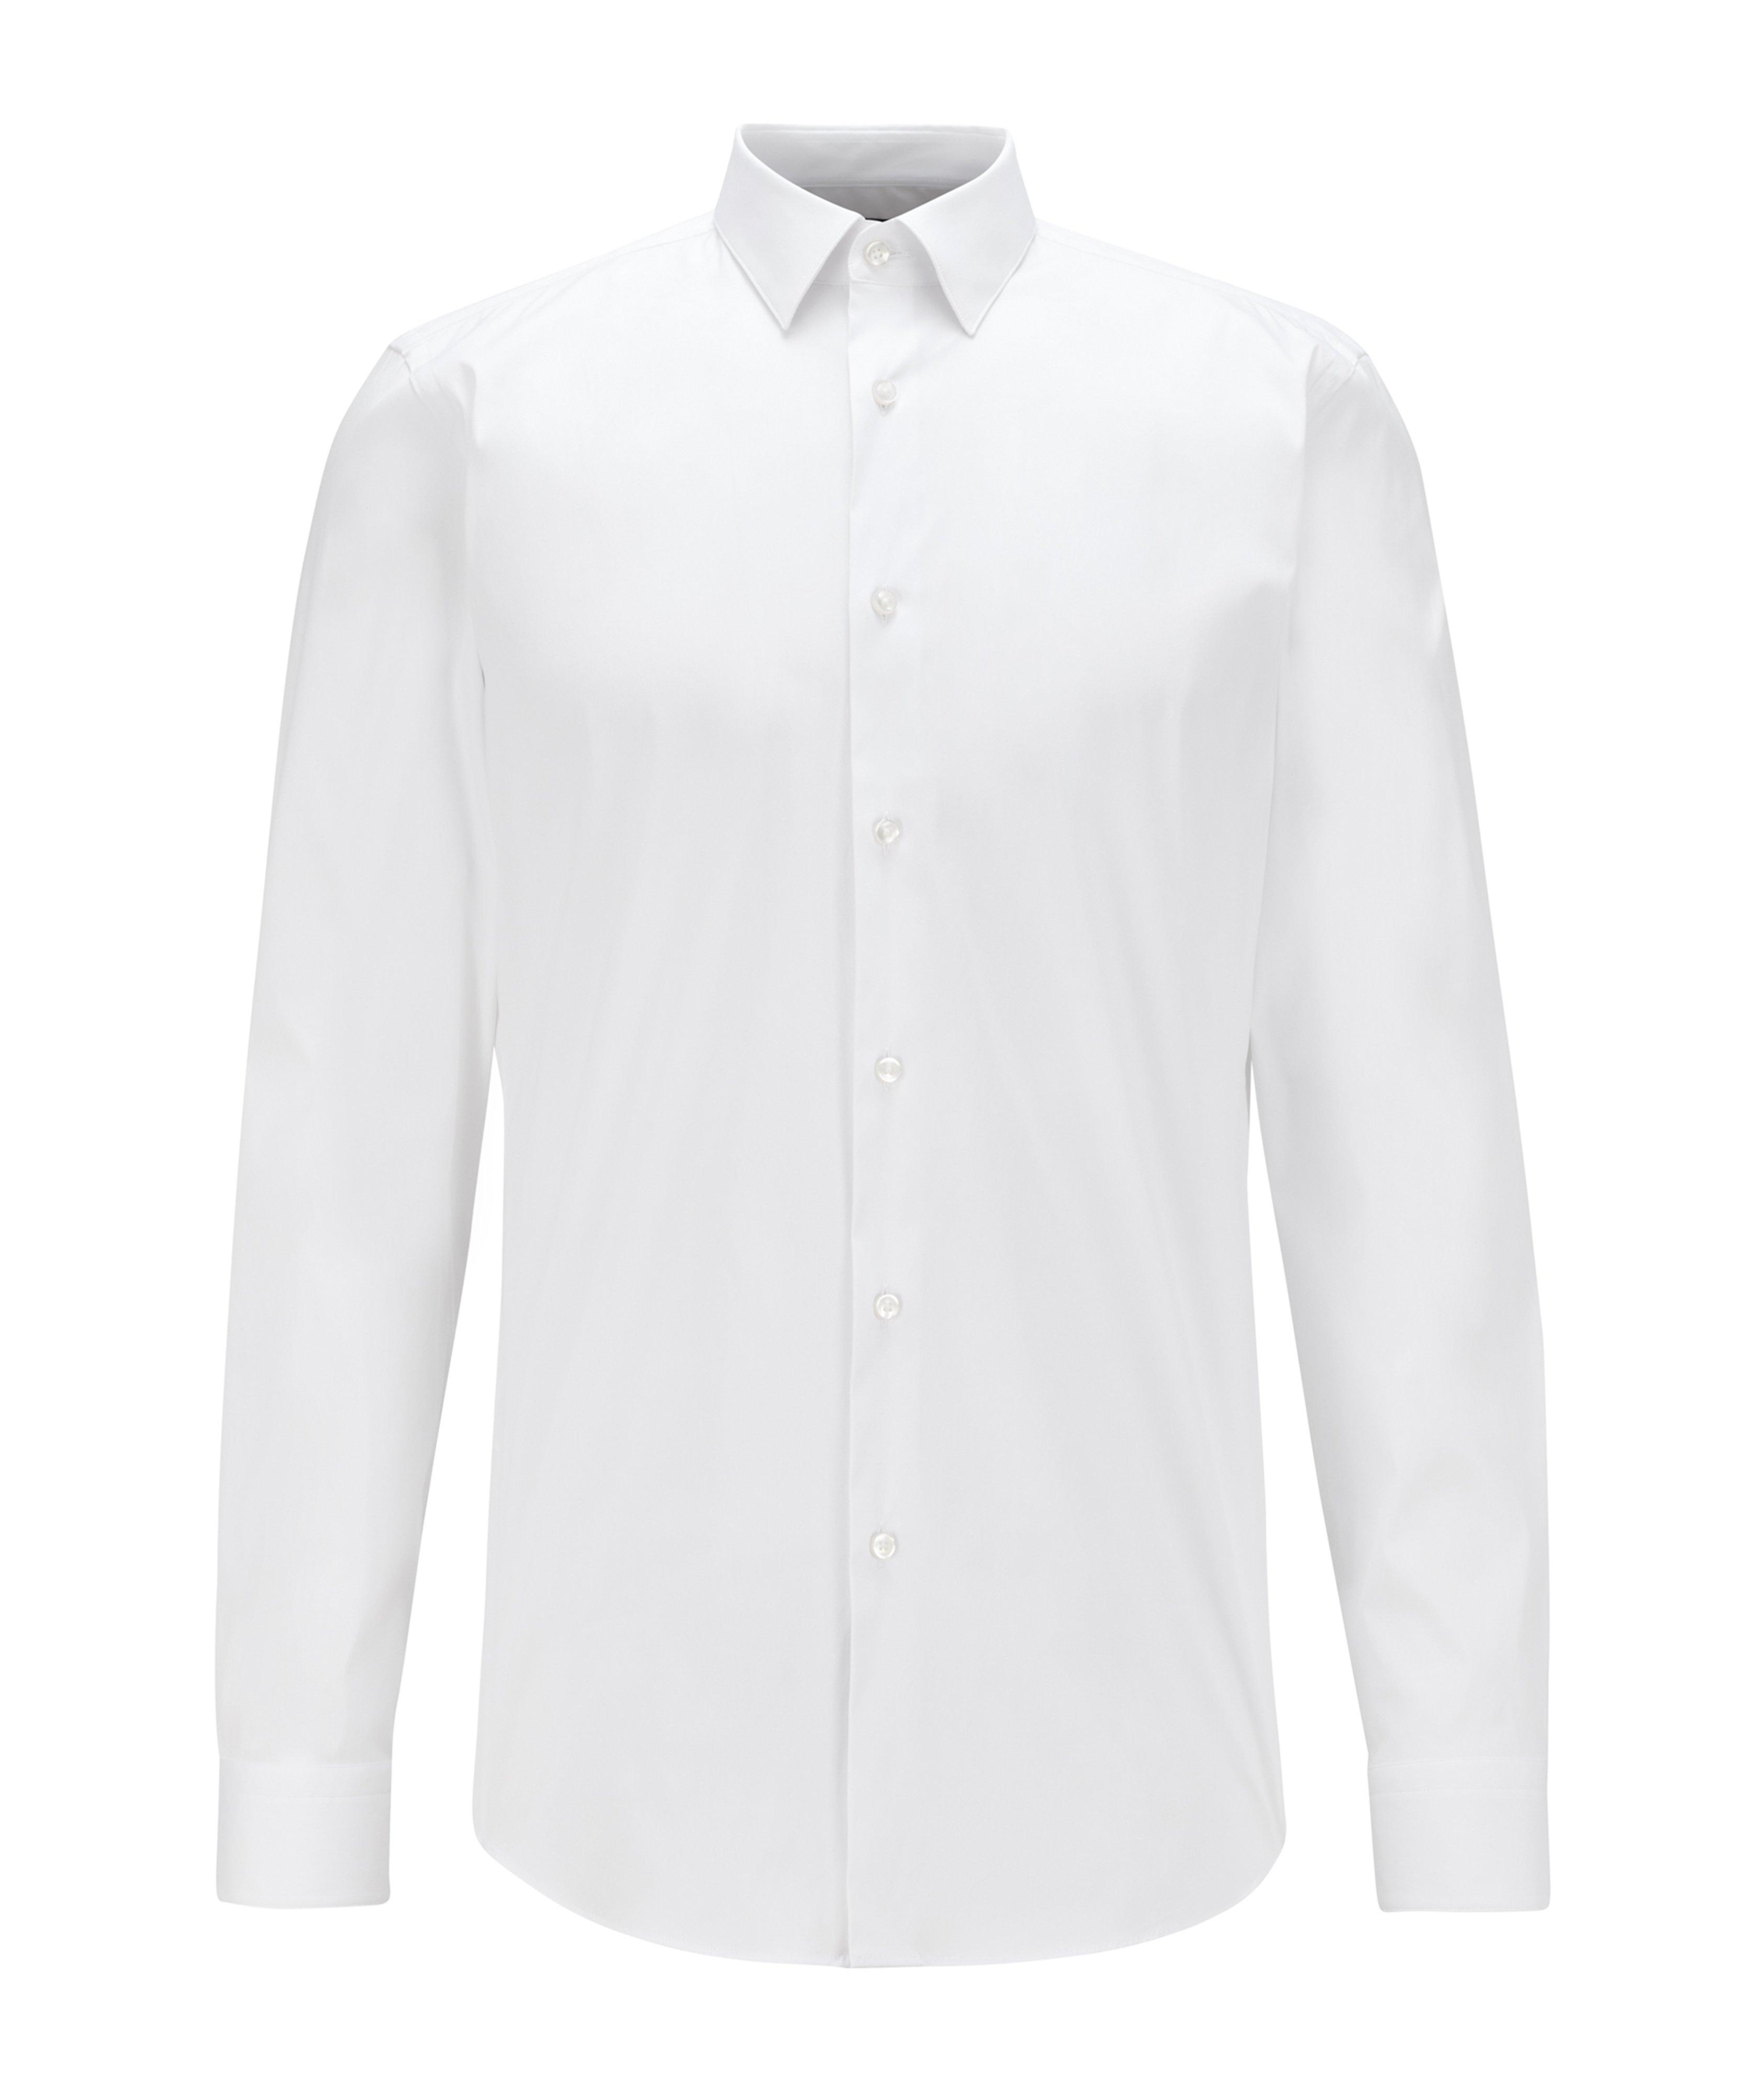 Slim-Fit Stretch-Cotton Dress Shirt image 0